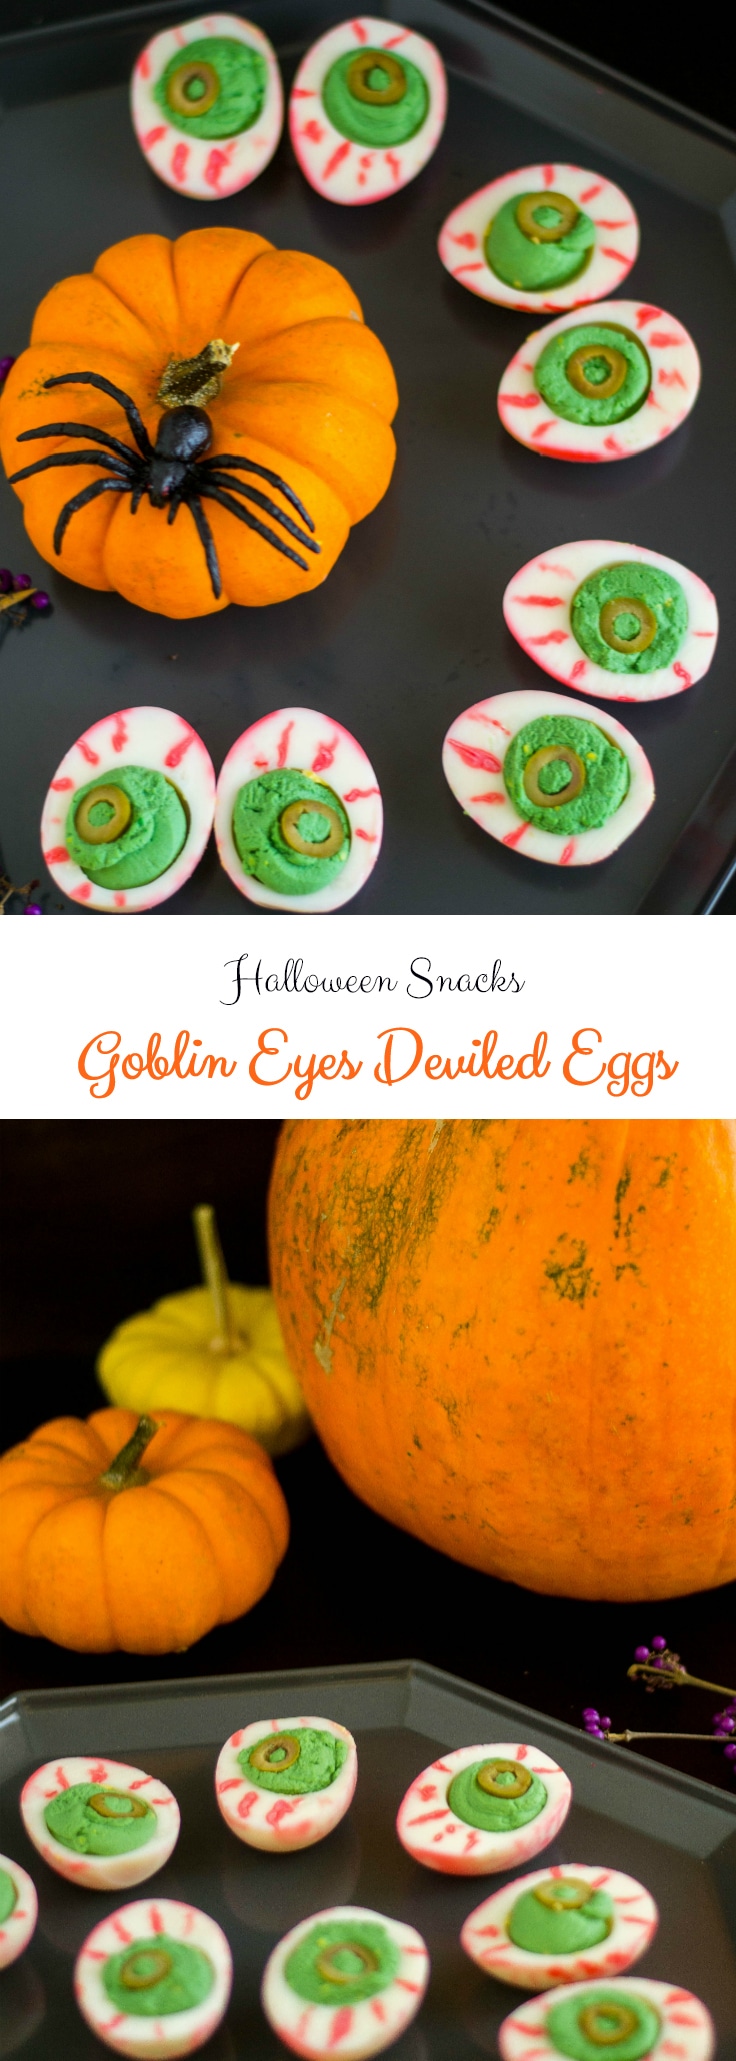 Halloween Deviled Eggs - Goblin Eyes